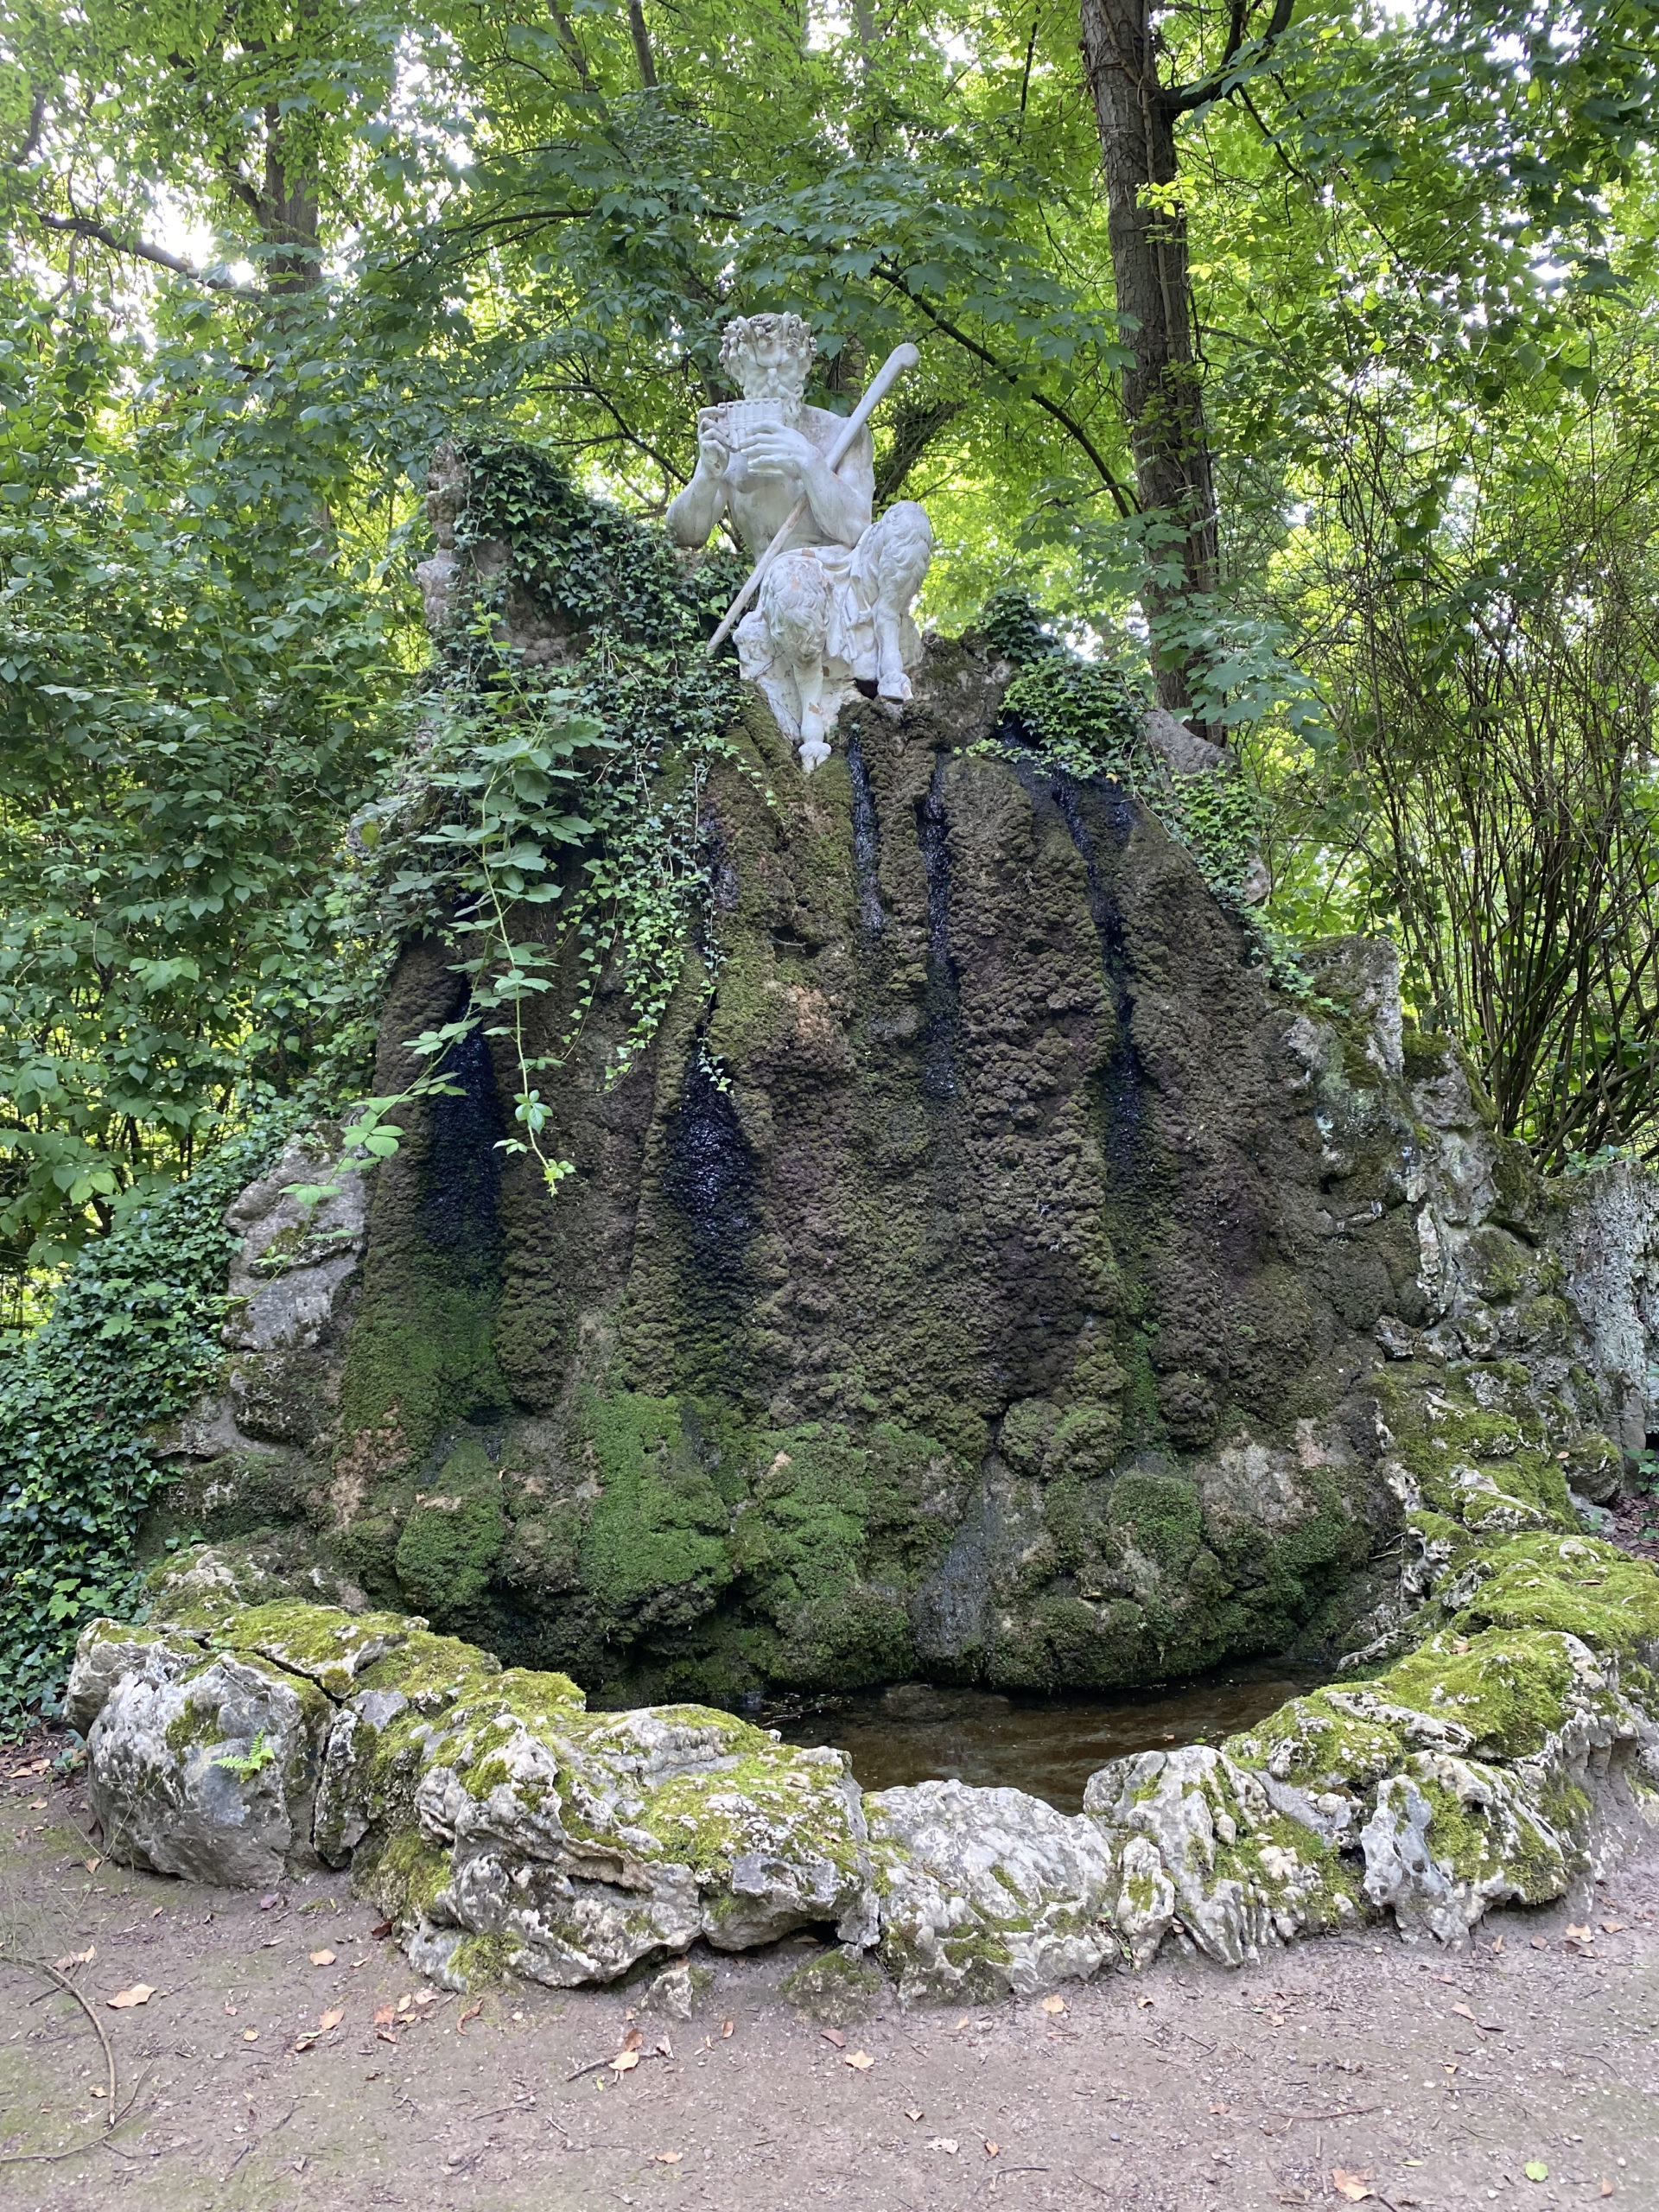 Pan’s grotto